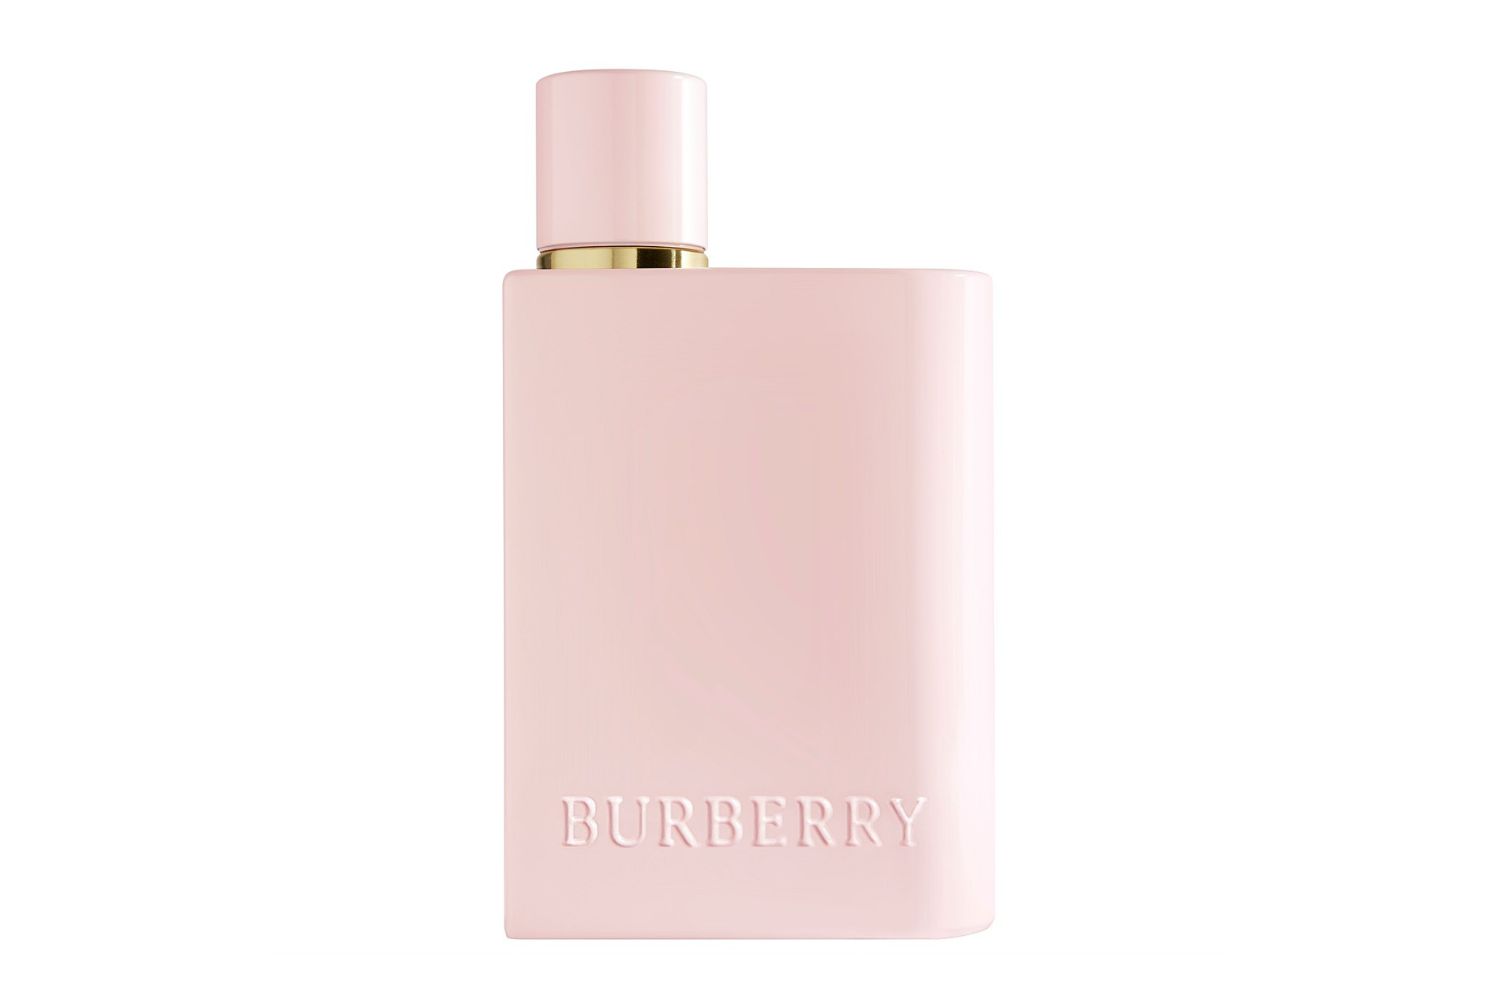 Burberry Her Elixir EDP, 100ml, $233 at Burberry